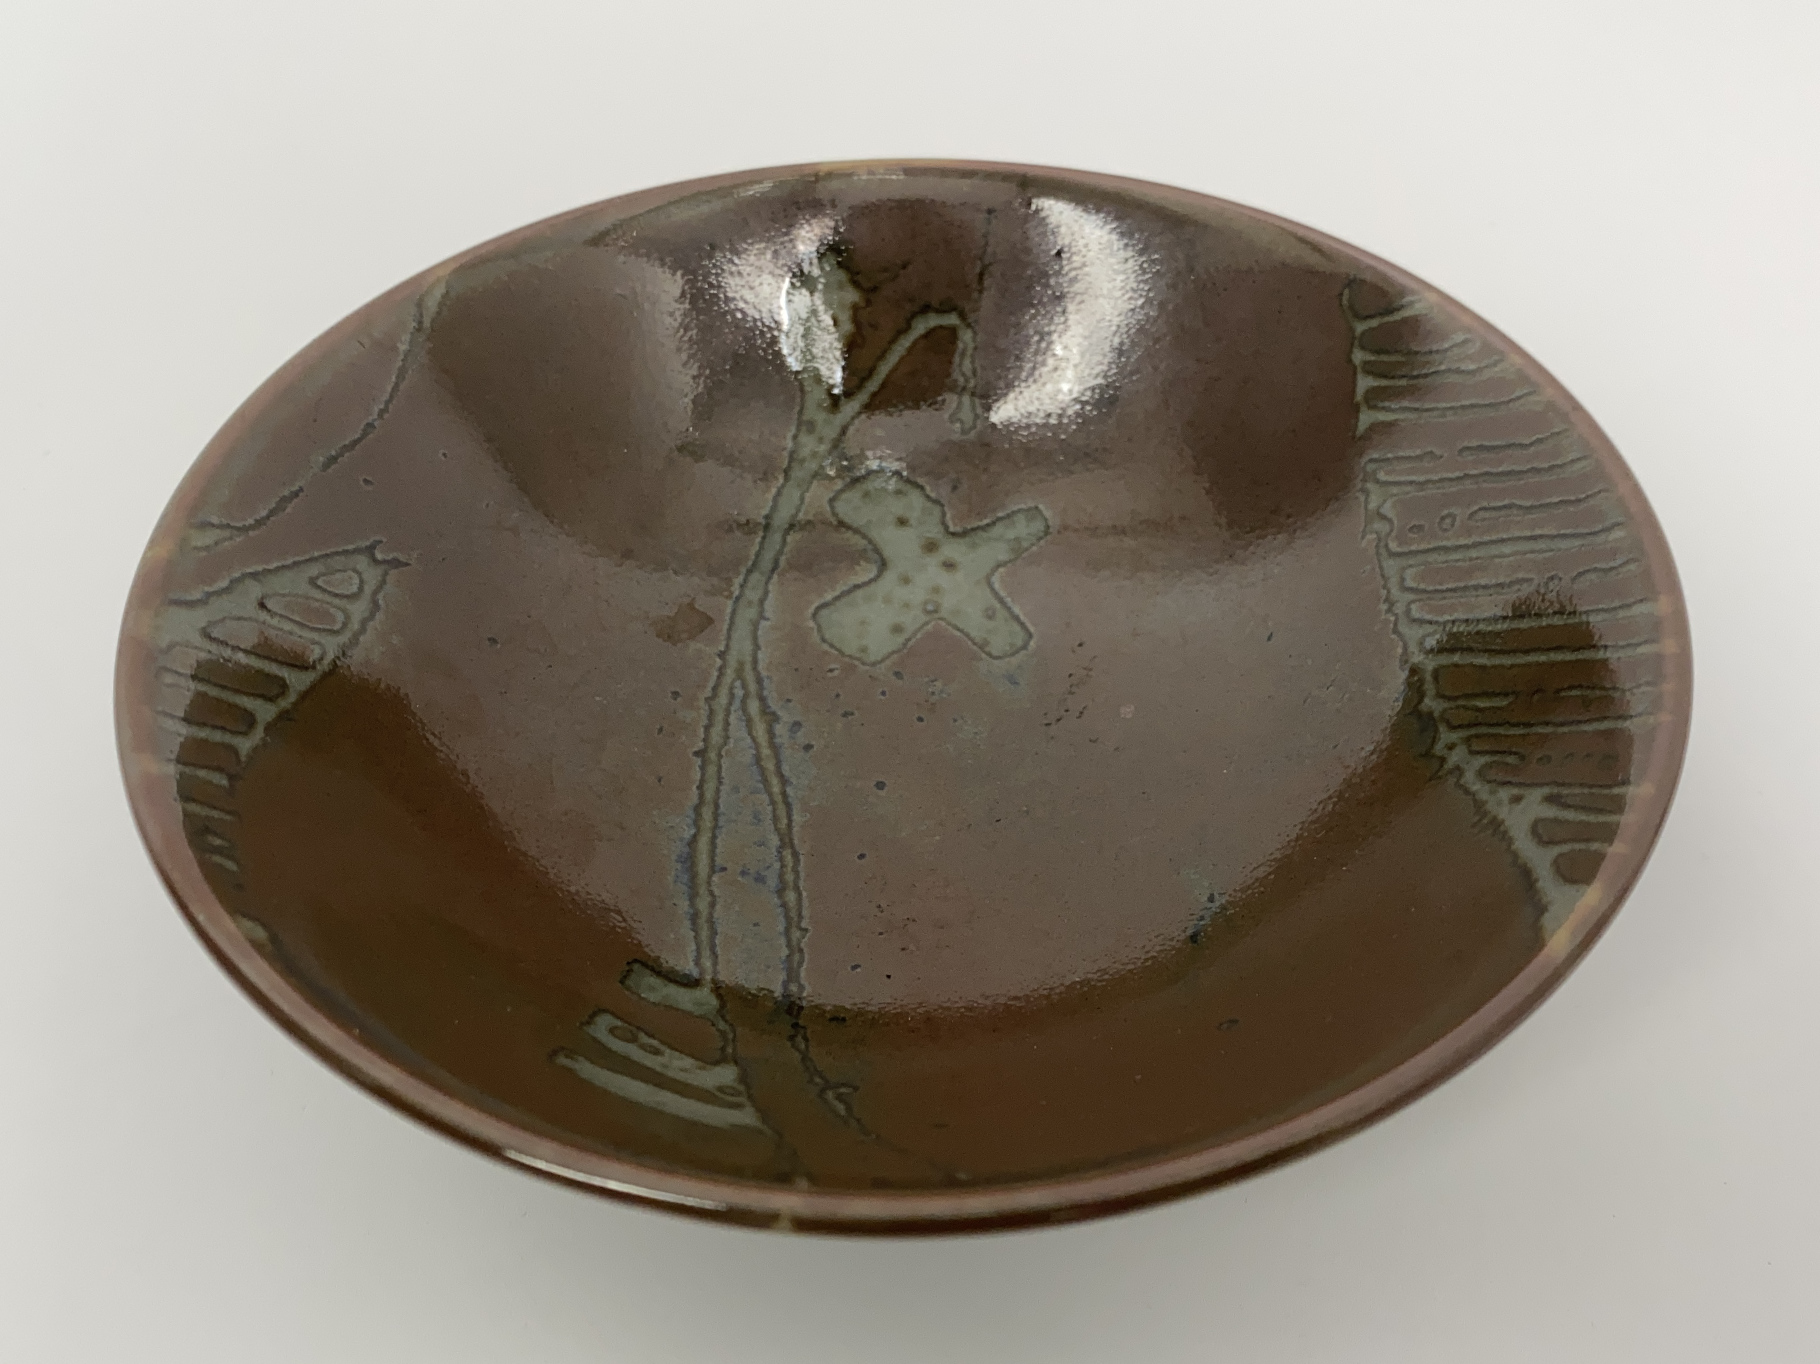 Ceramic Bowl, Stoneware, abstract Decor, Celadon Glaze, Wax Painting, Iron Glaze, 1980